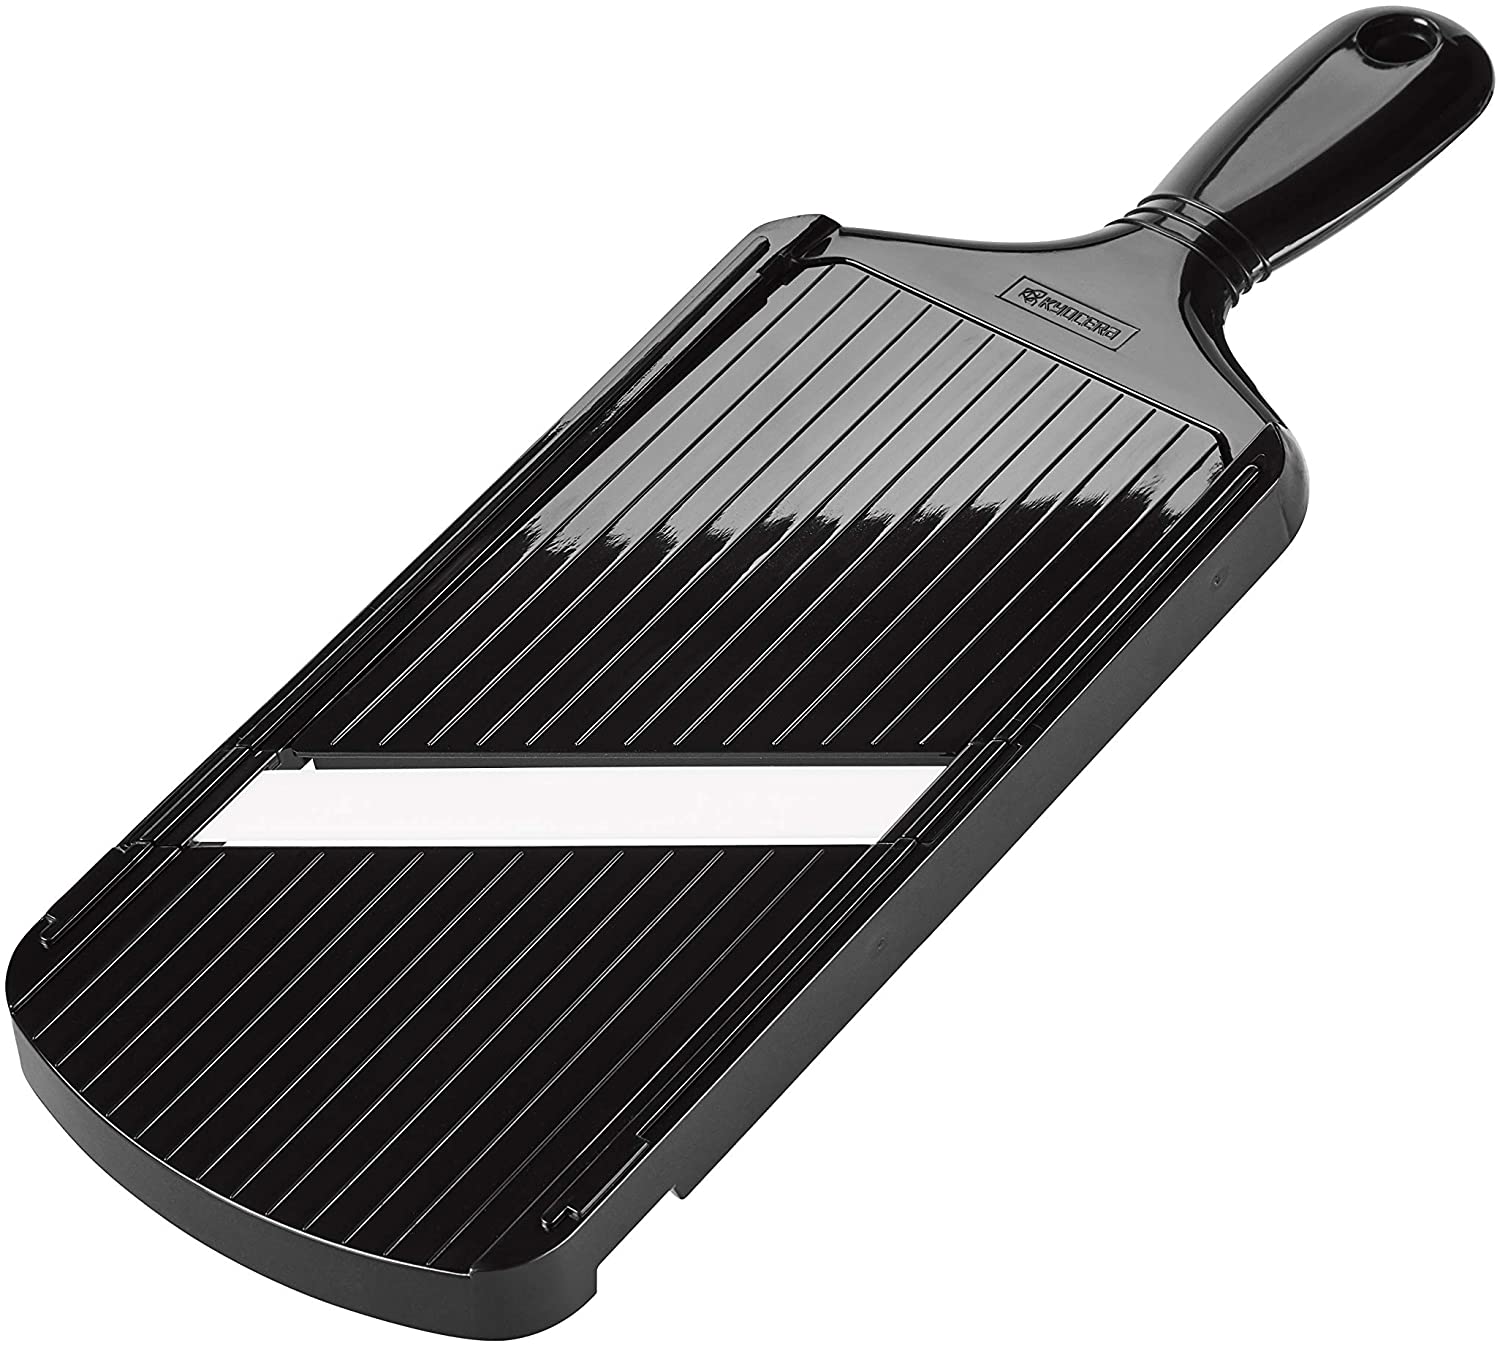 Kyocera Double Edge Ceramic Mandoline Slicer – Black